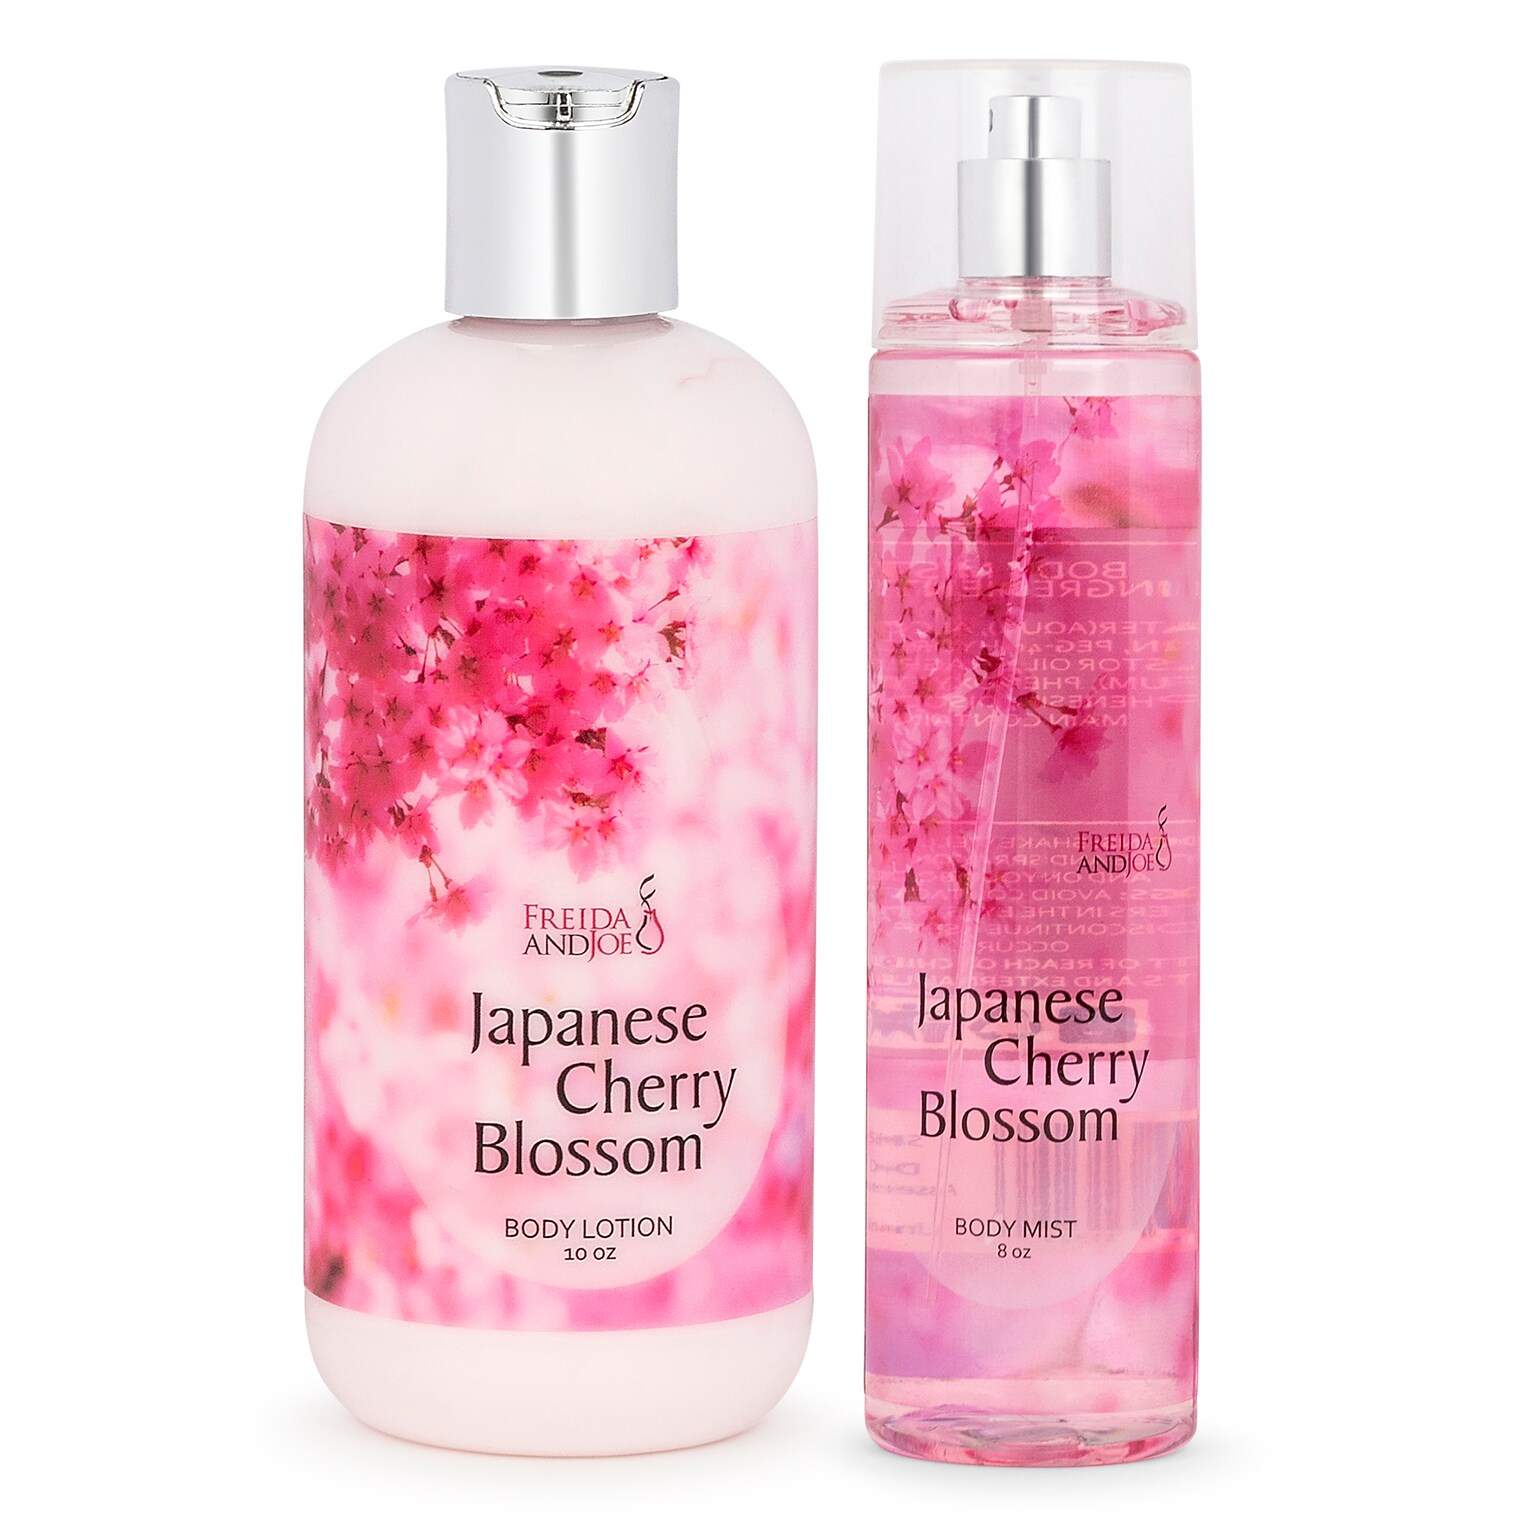 Freida and Joe Japanese Cherry Blossom Fragrance Body Lotion and Body Mist Spray Set (FJ-700)